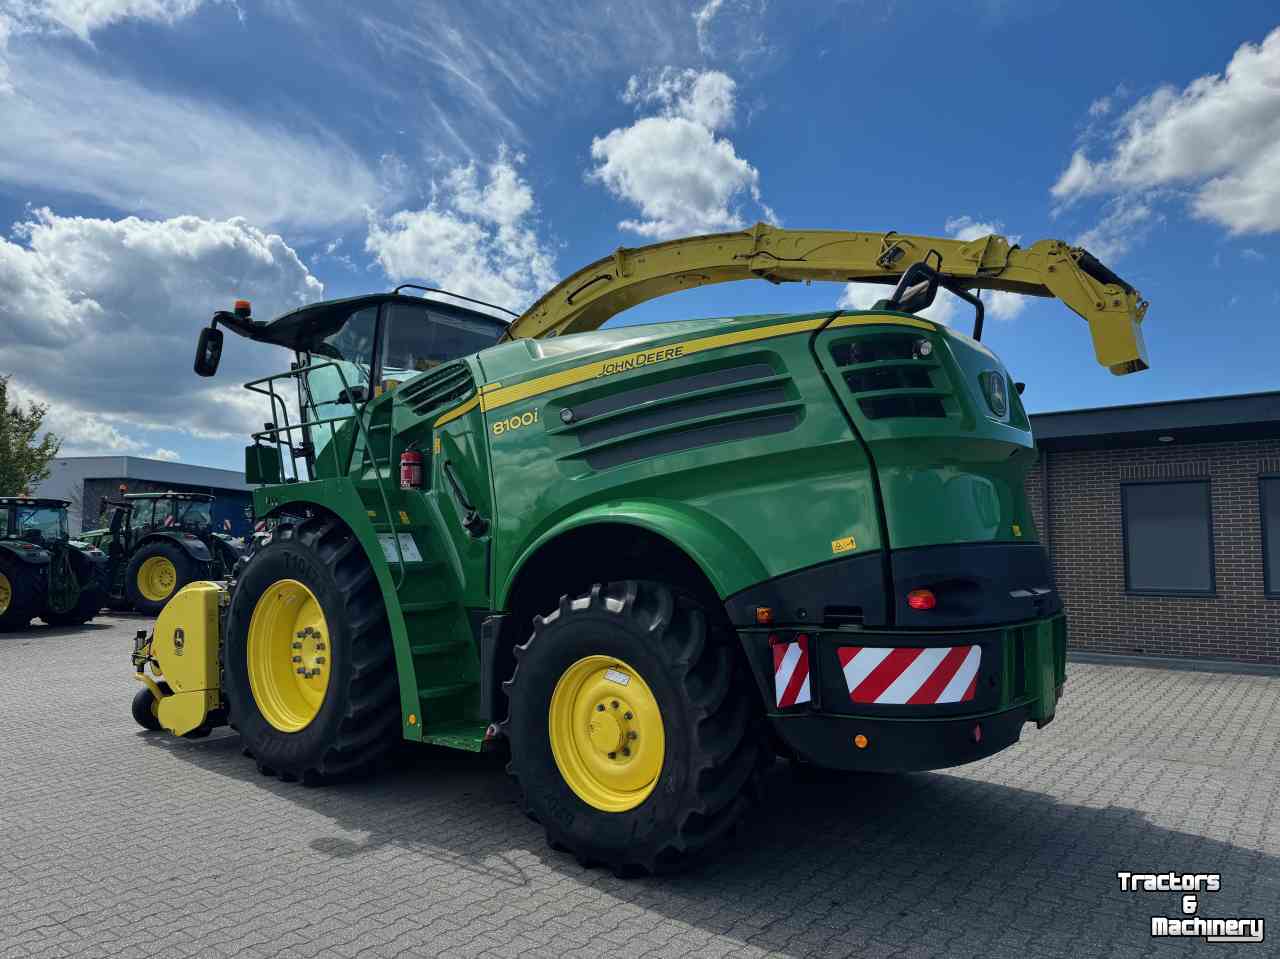 Forage-harvester John Deere 8100 4WD 2019 865/110 UUR + JD 639 PICKUP!!!